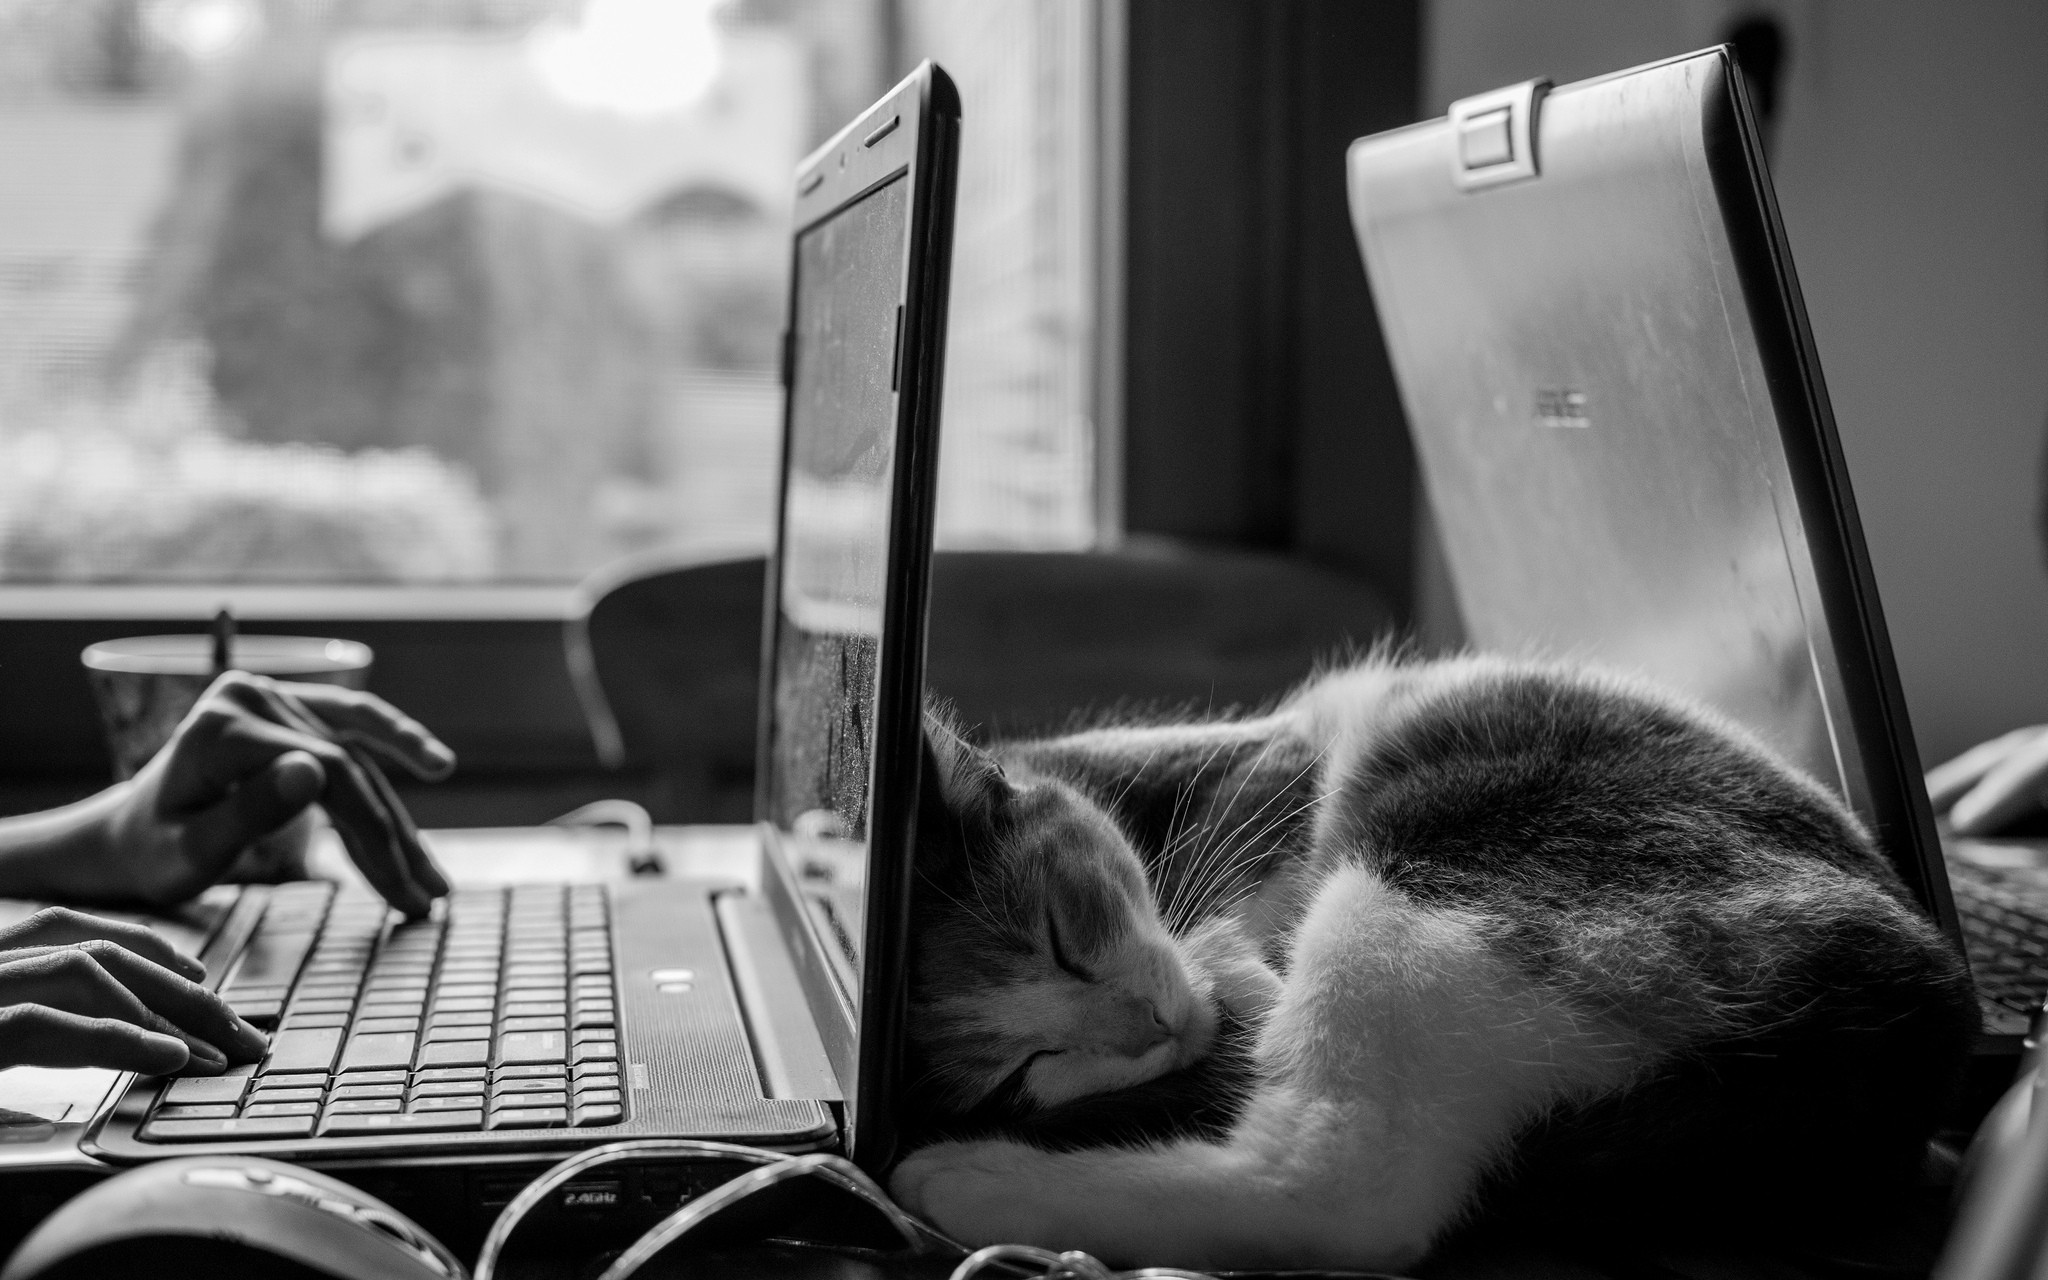 General 2048x1280 monochrome cats desk laptop sleeping ASUS work peace animals mammals indoors